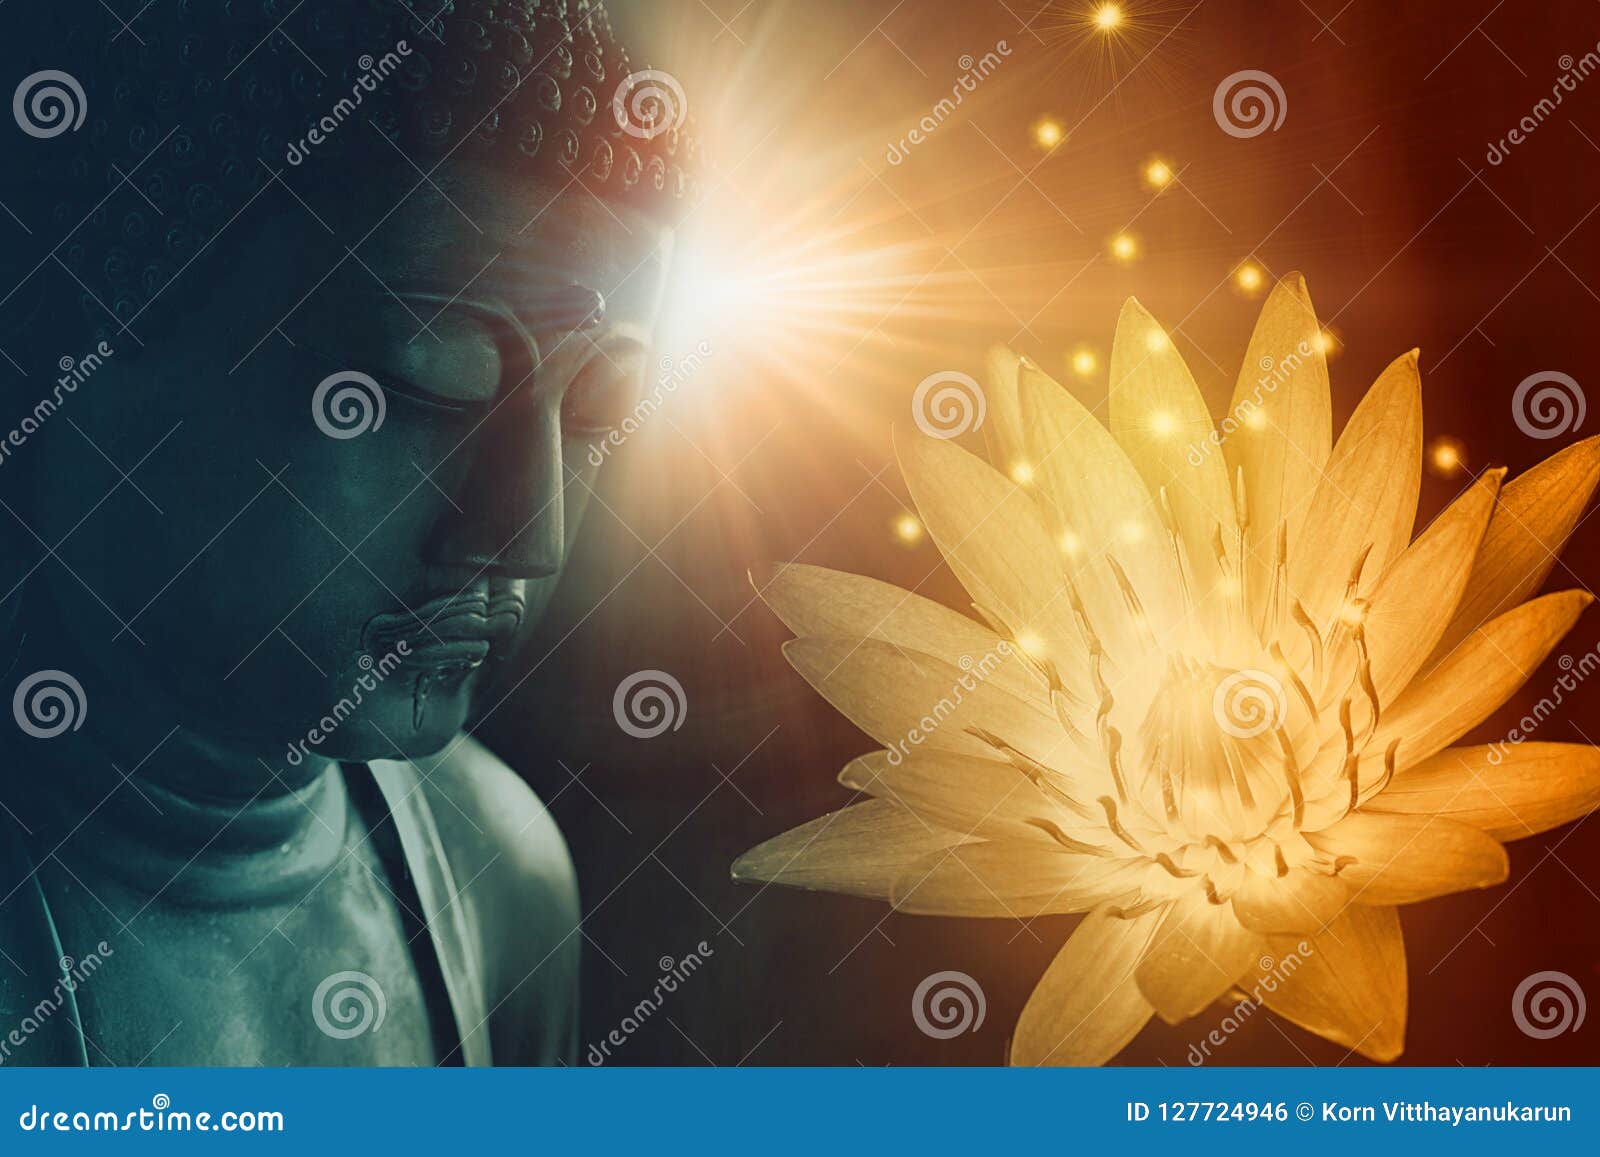 peace buddha face enlighten with golden lotus